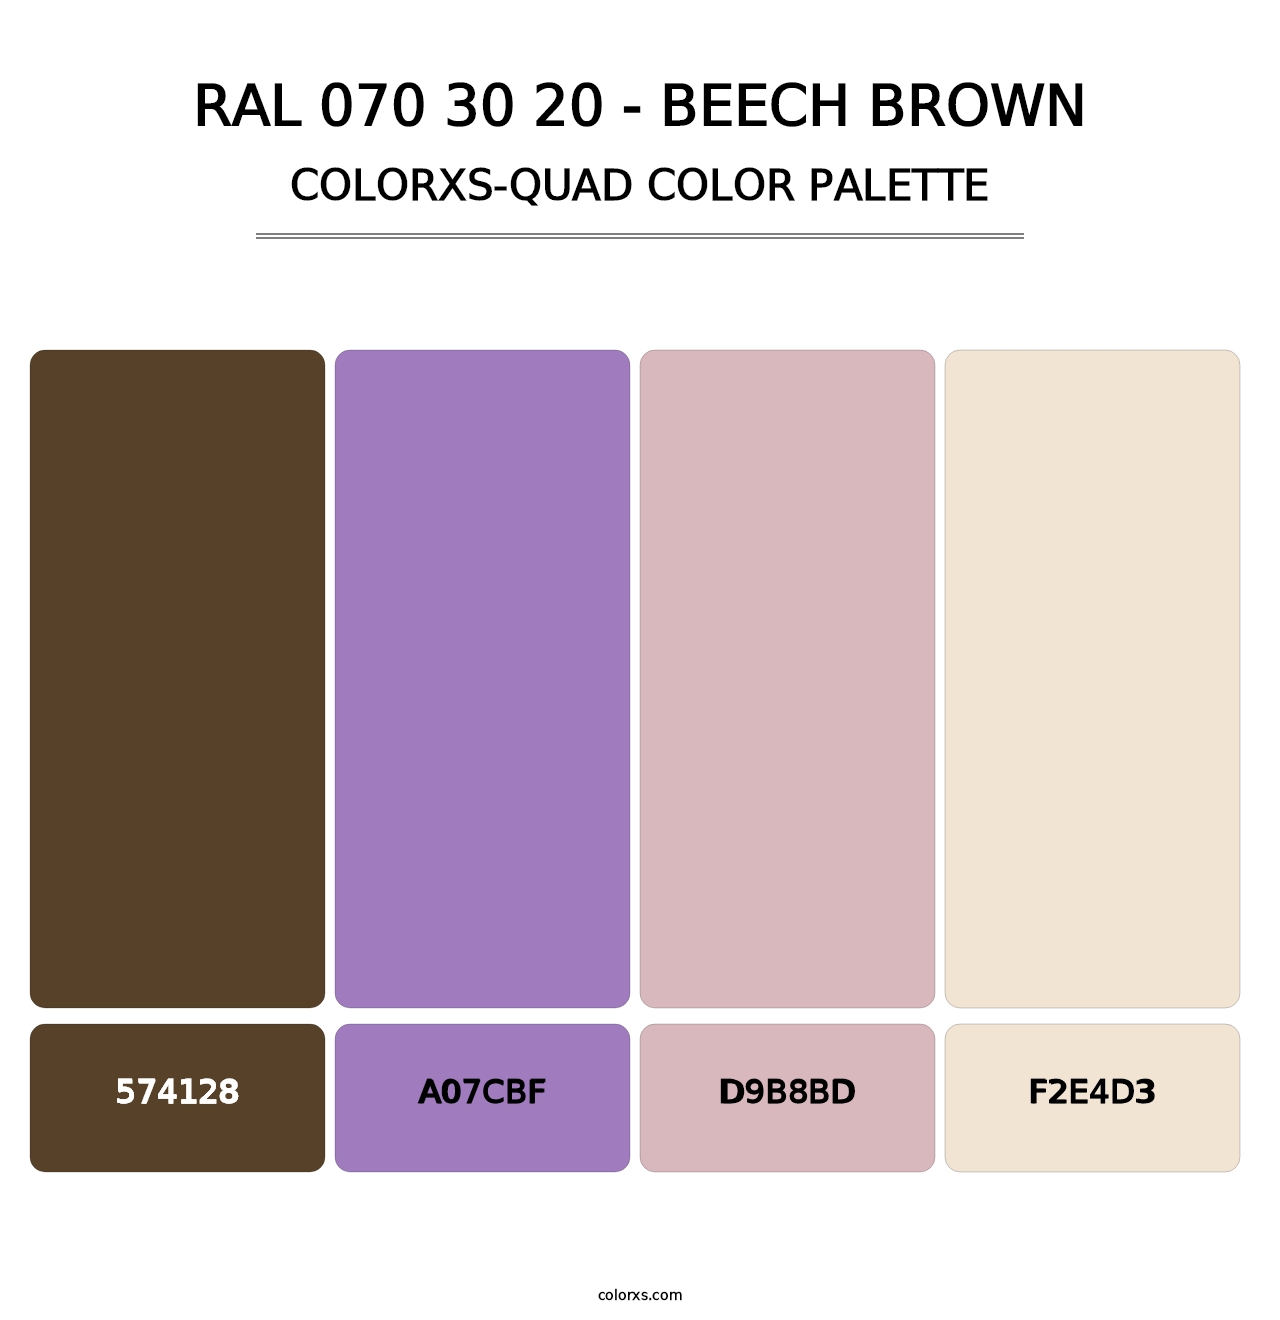 RAL 070 30 20 - Beech Brown - Colorxs Quad Palette